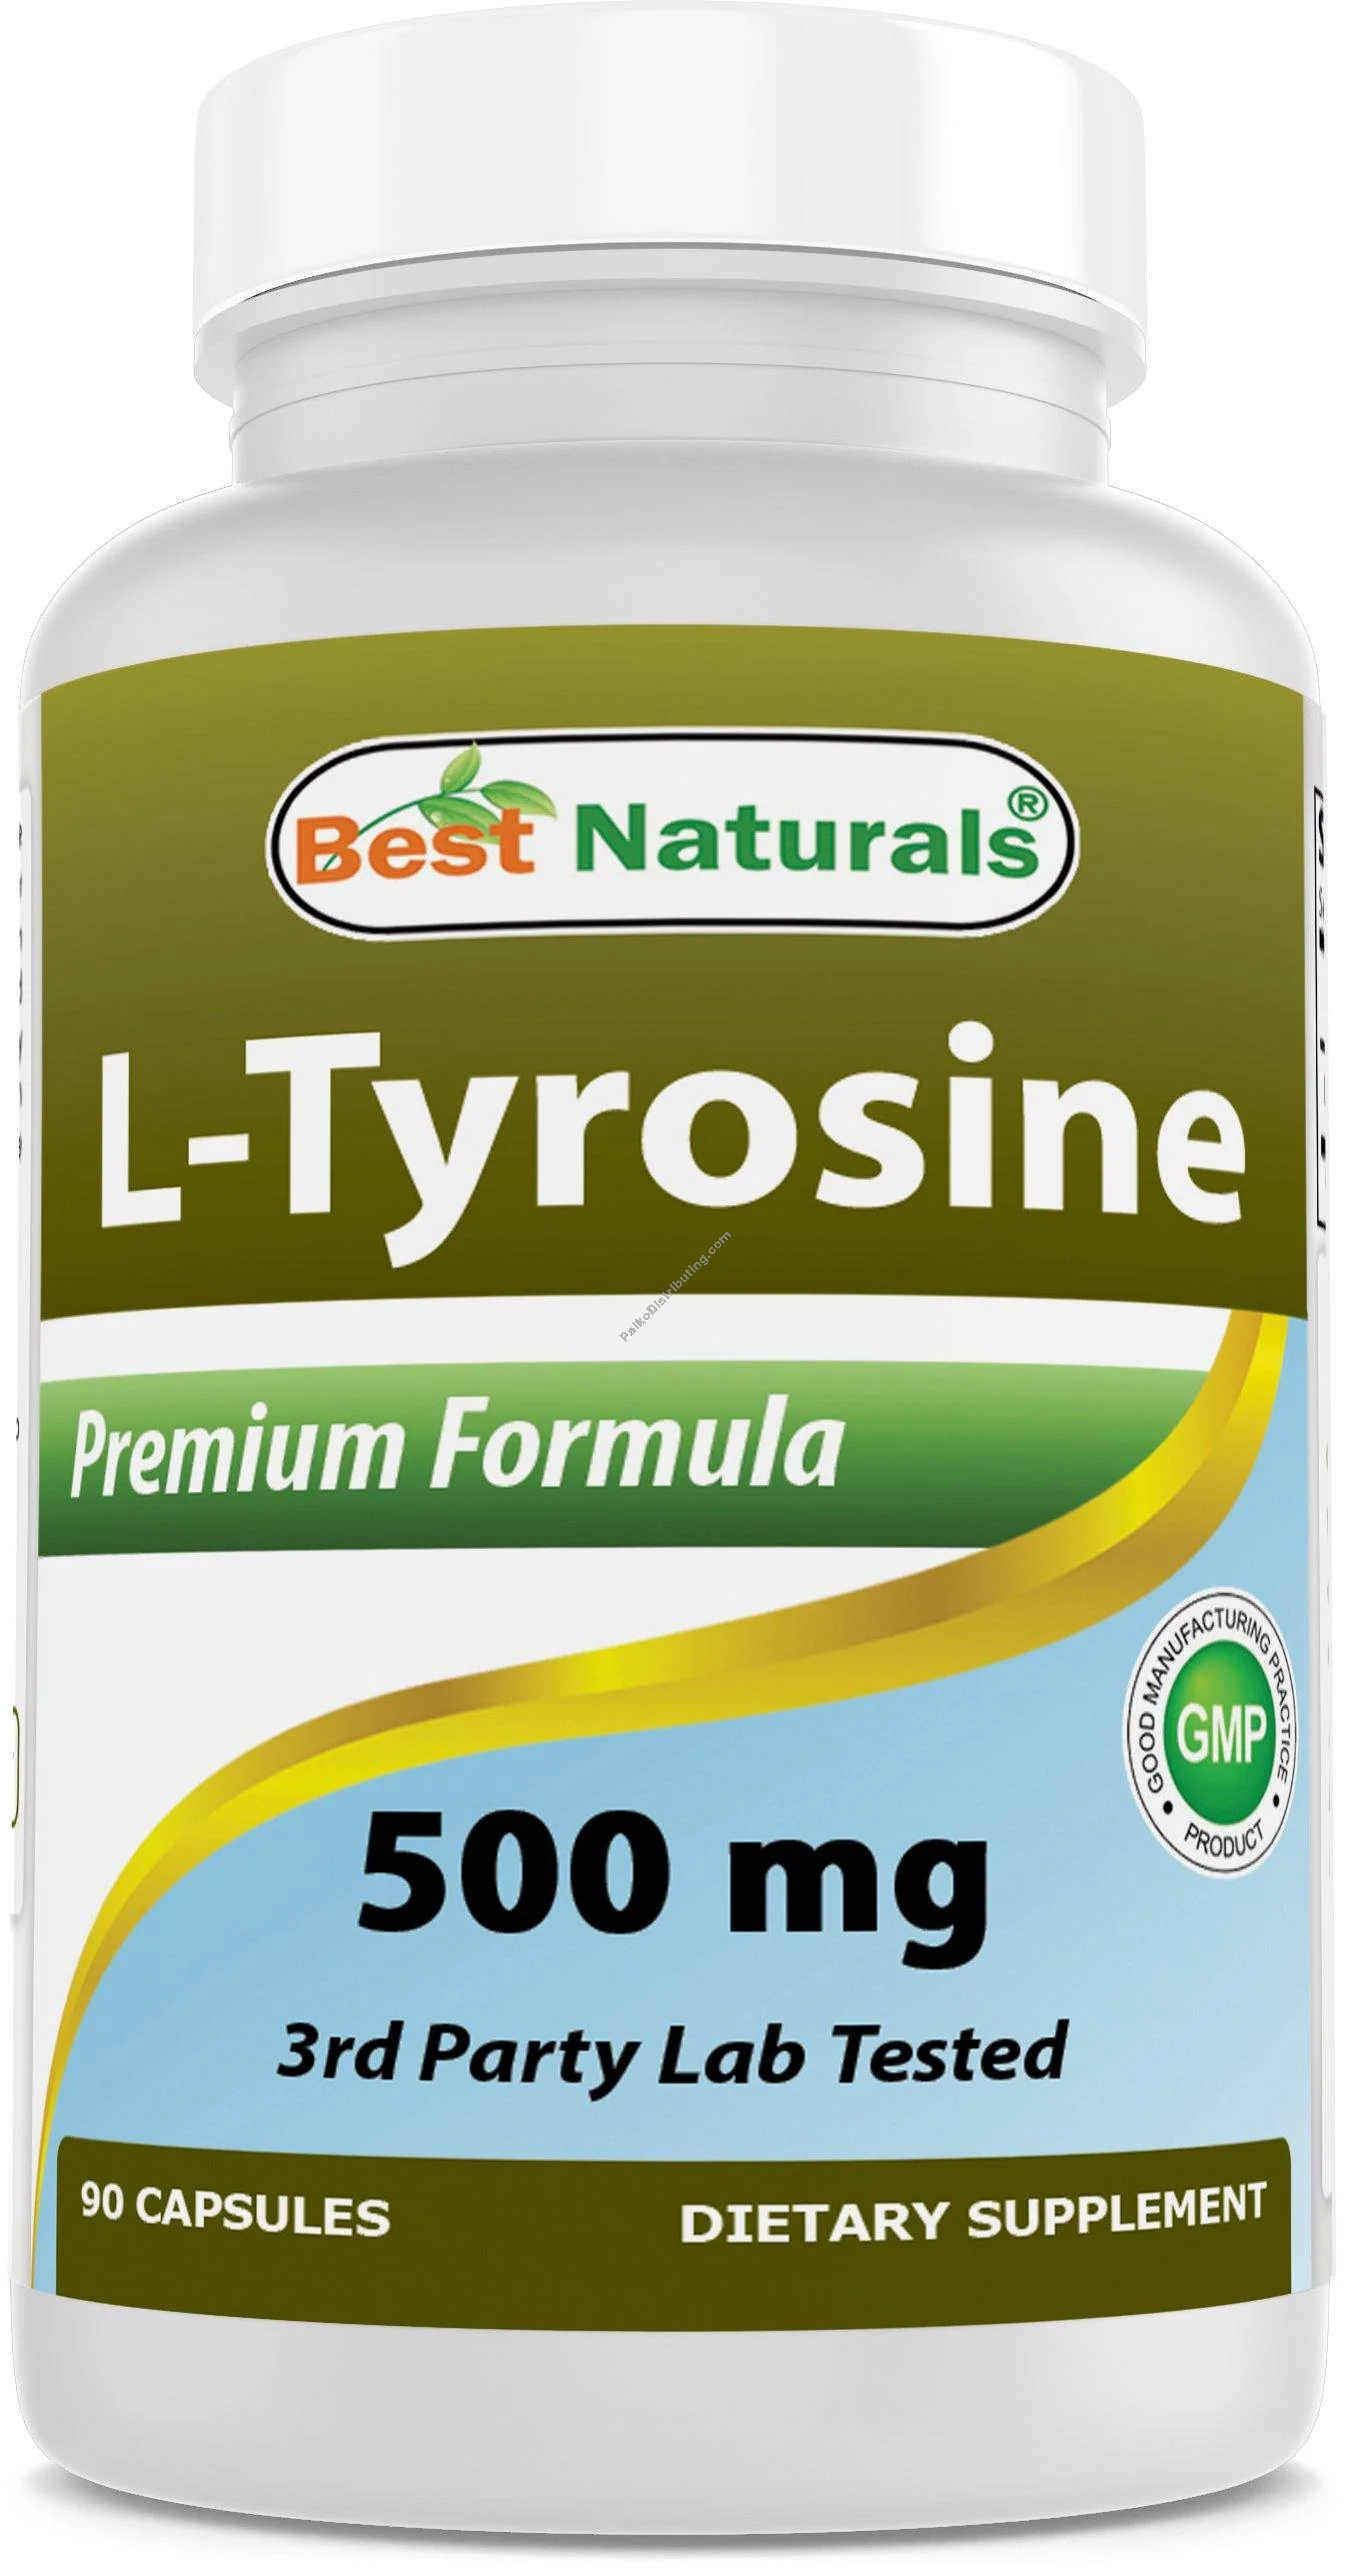 Product Image: L-Tyrosine 500 mg